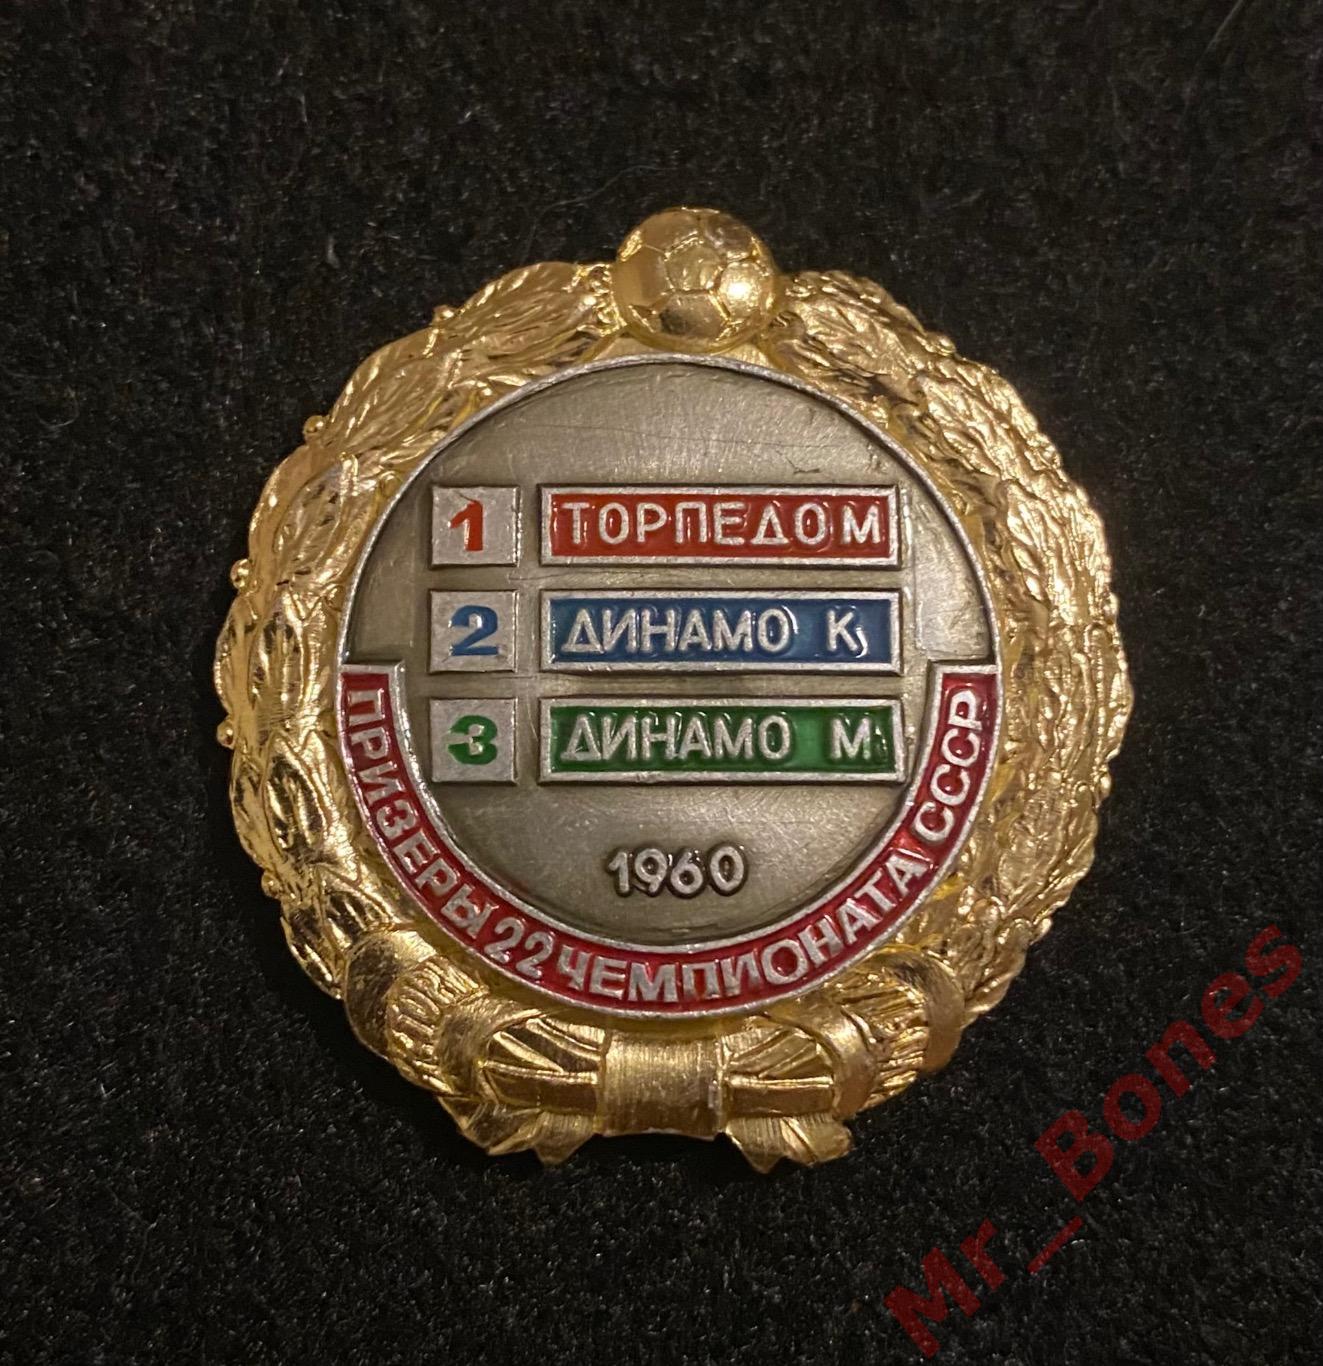 Призеры 22 чемпионата СССР (1960 г.) Торпедо, Динамо Киев, Динамо Москва